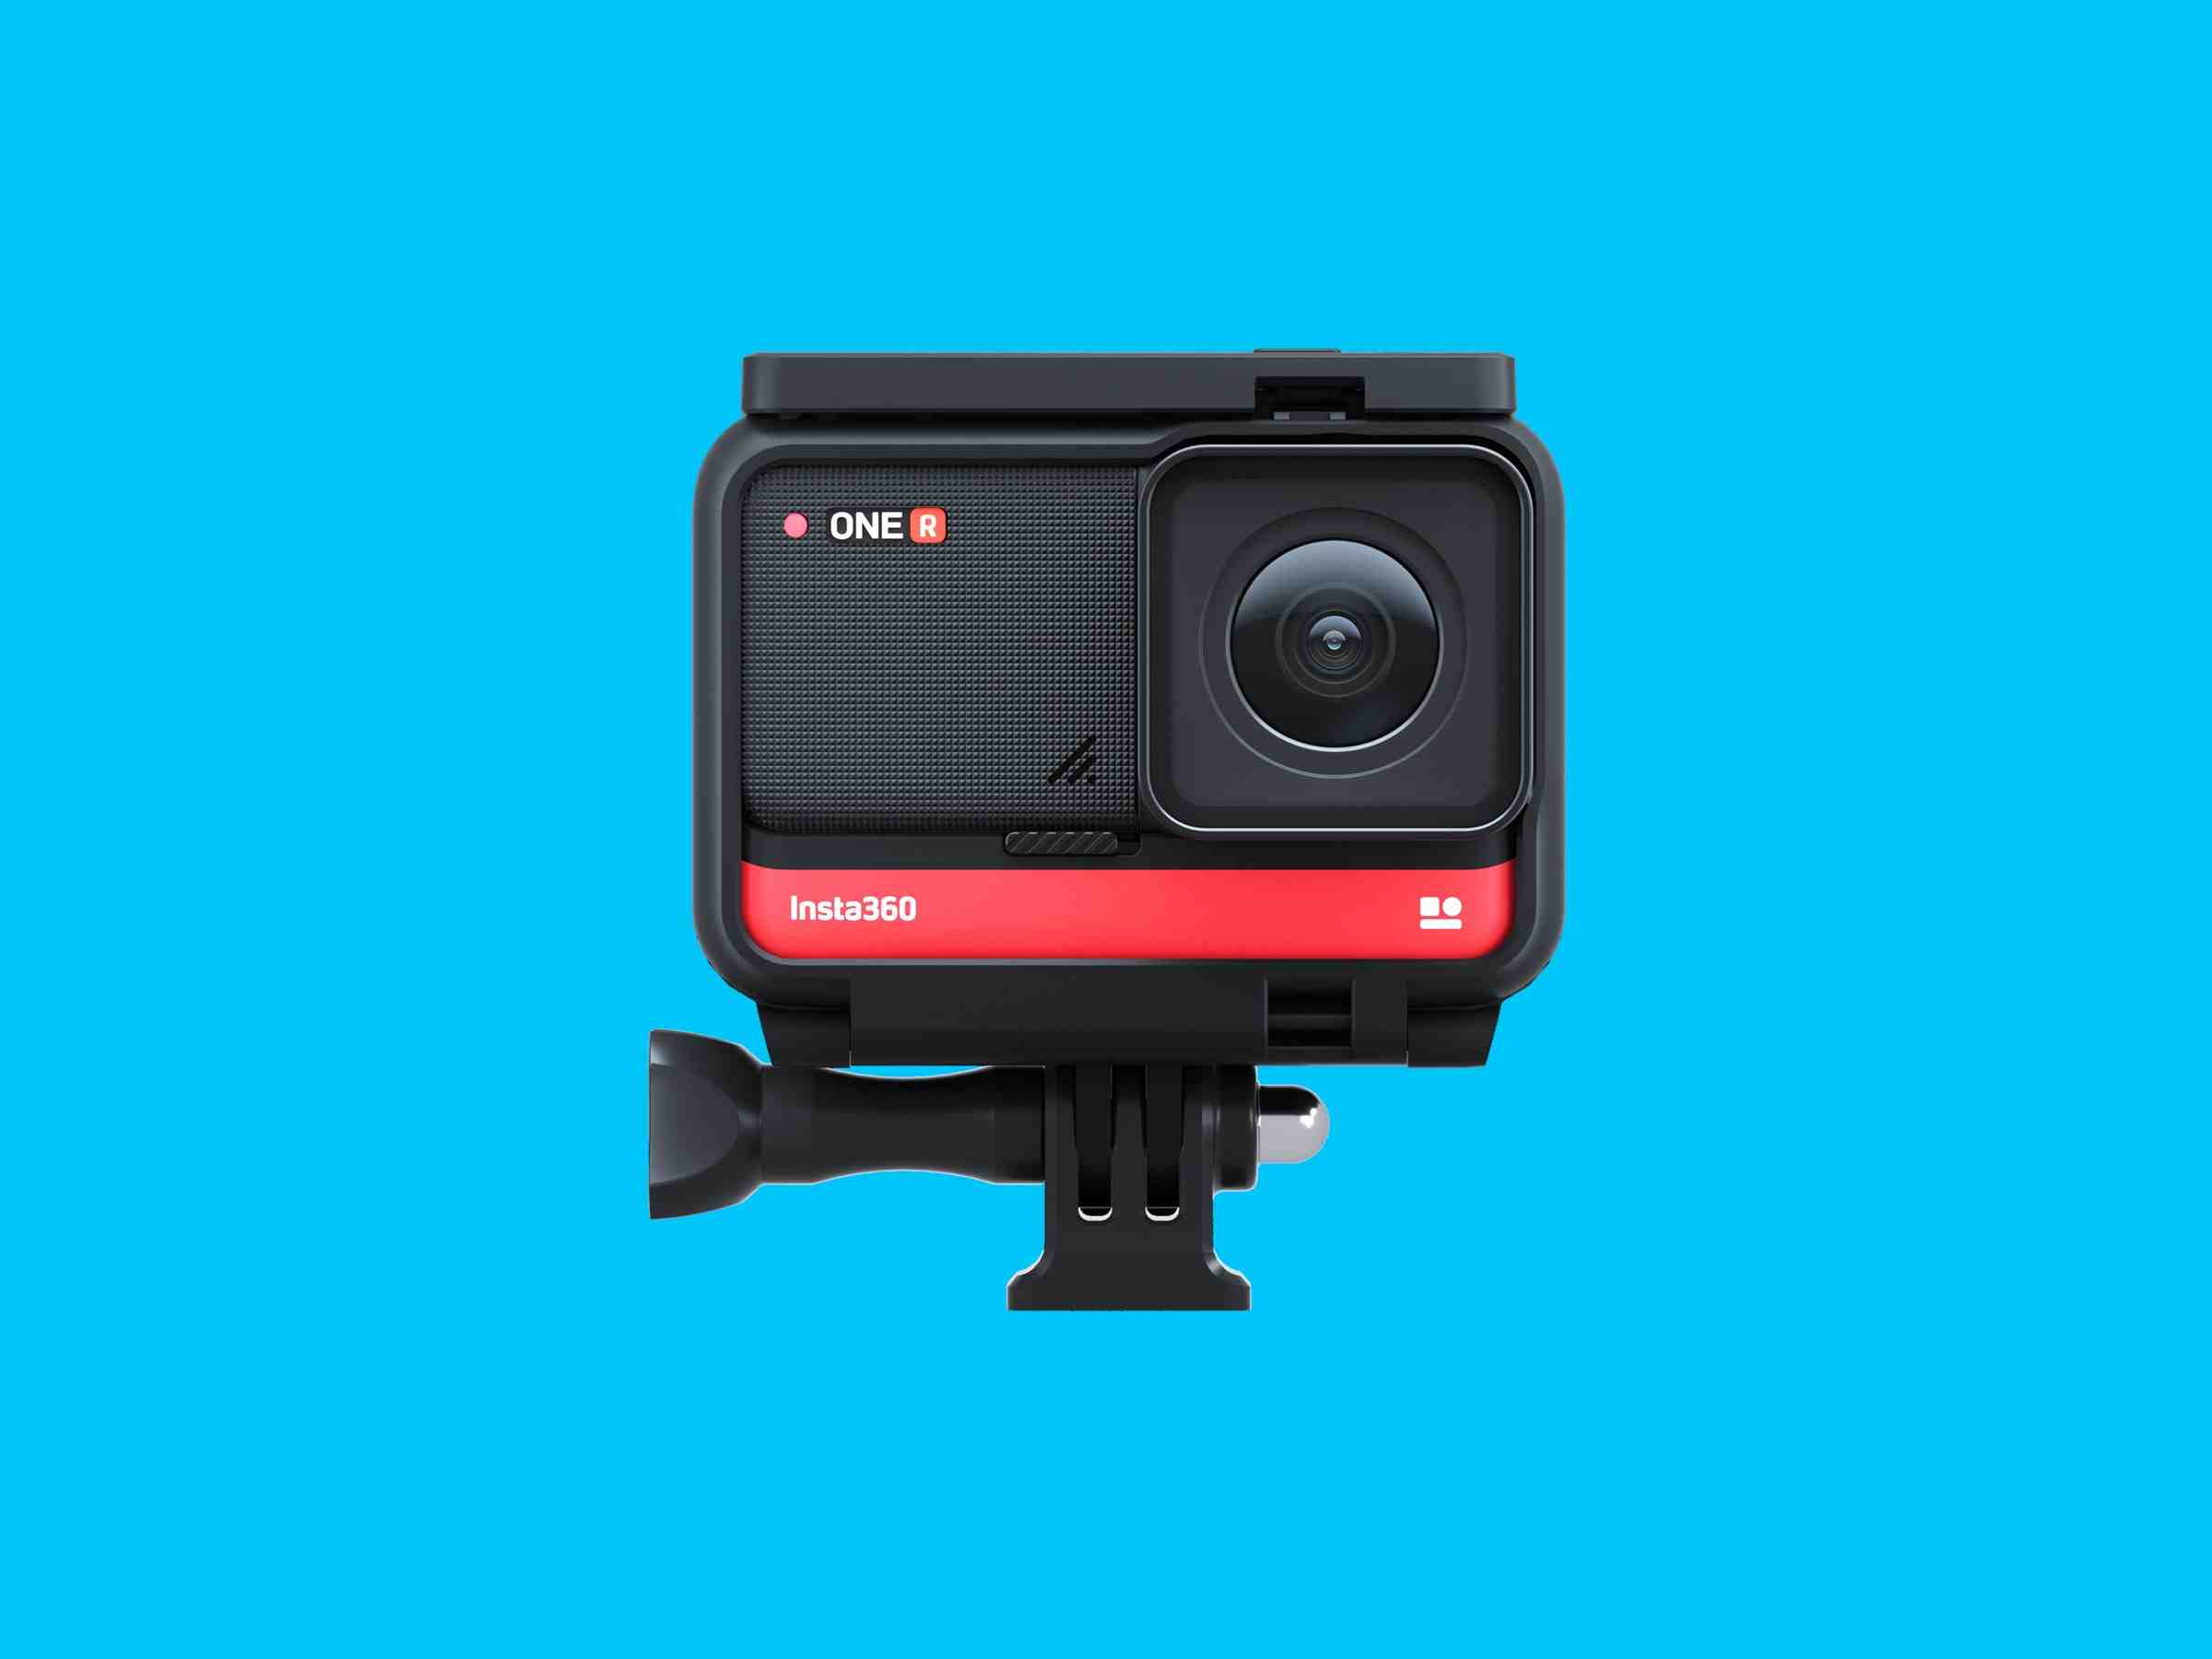 Is the Insta360 camera waterproof?